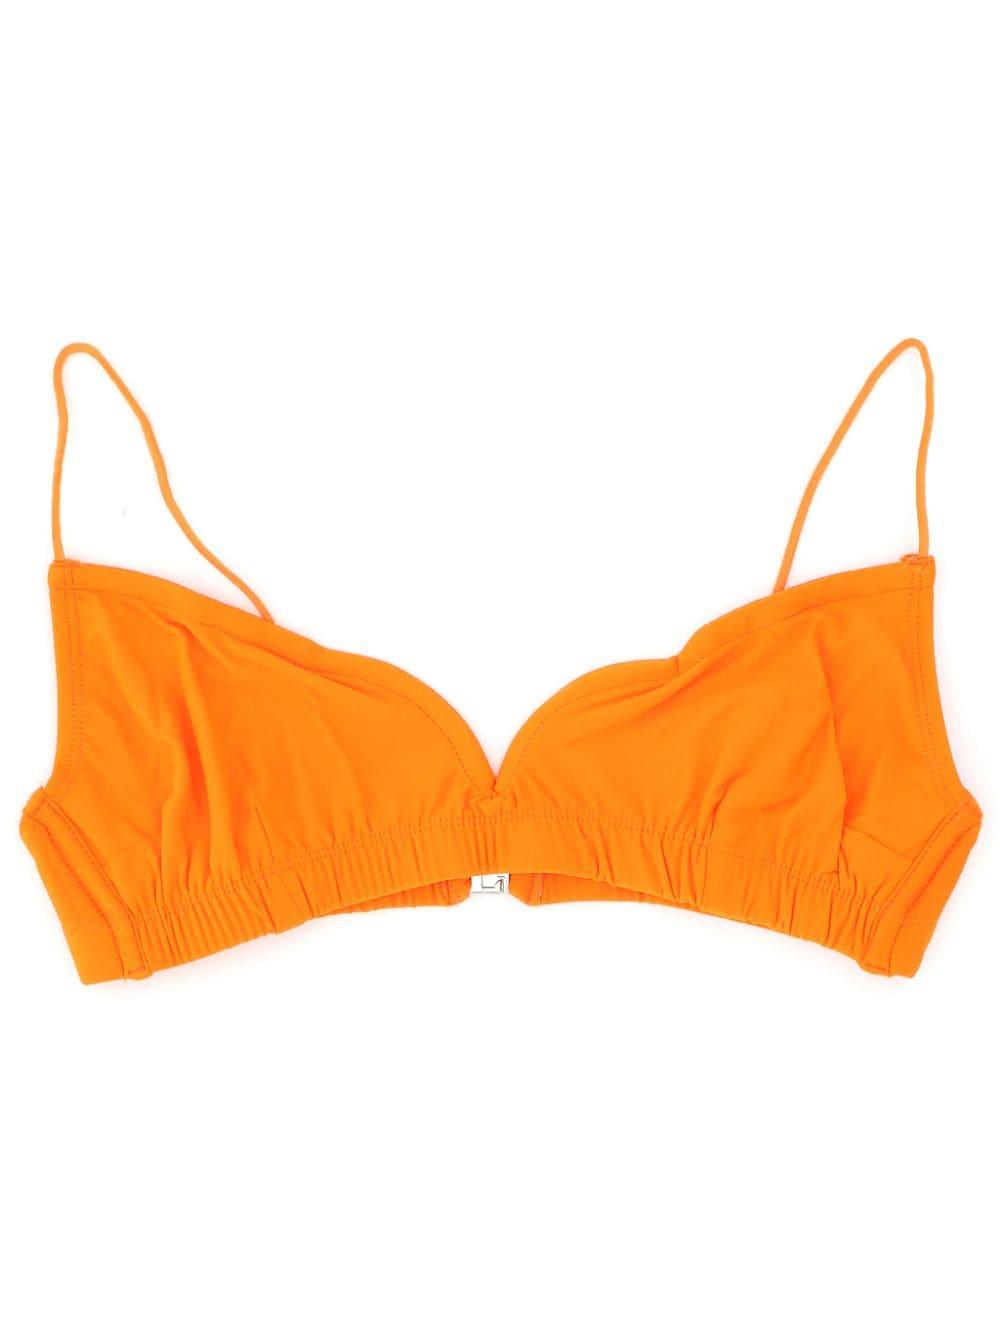 Leslie Amon Caro Bikini Top in Orange | Lyst Australia